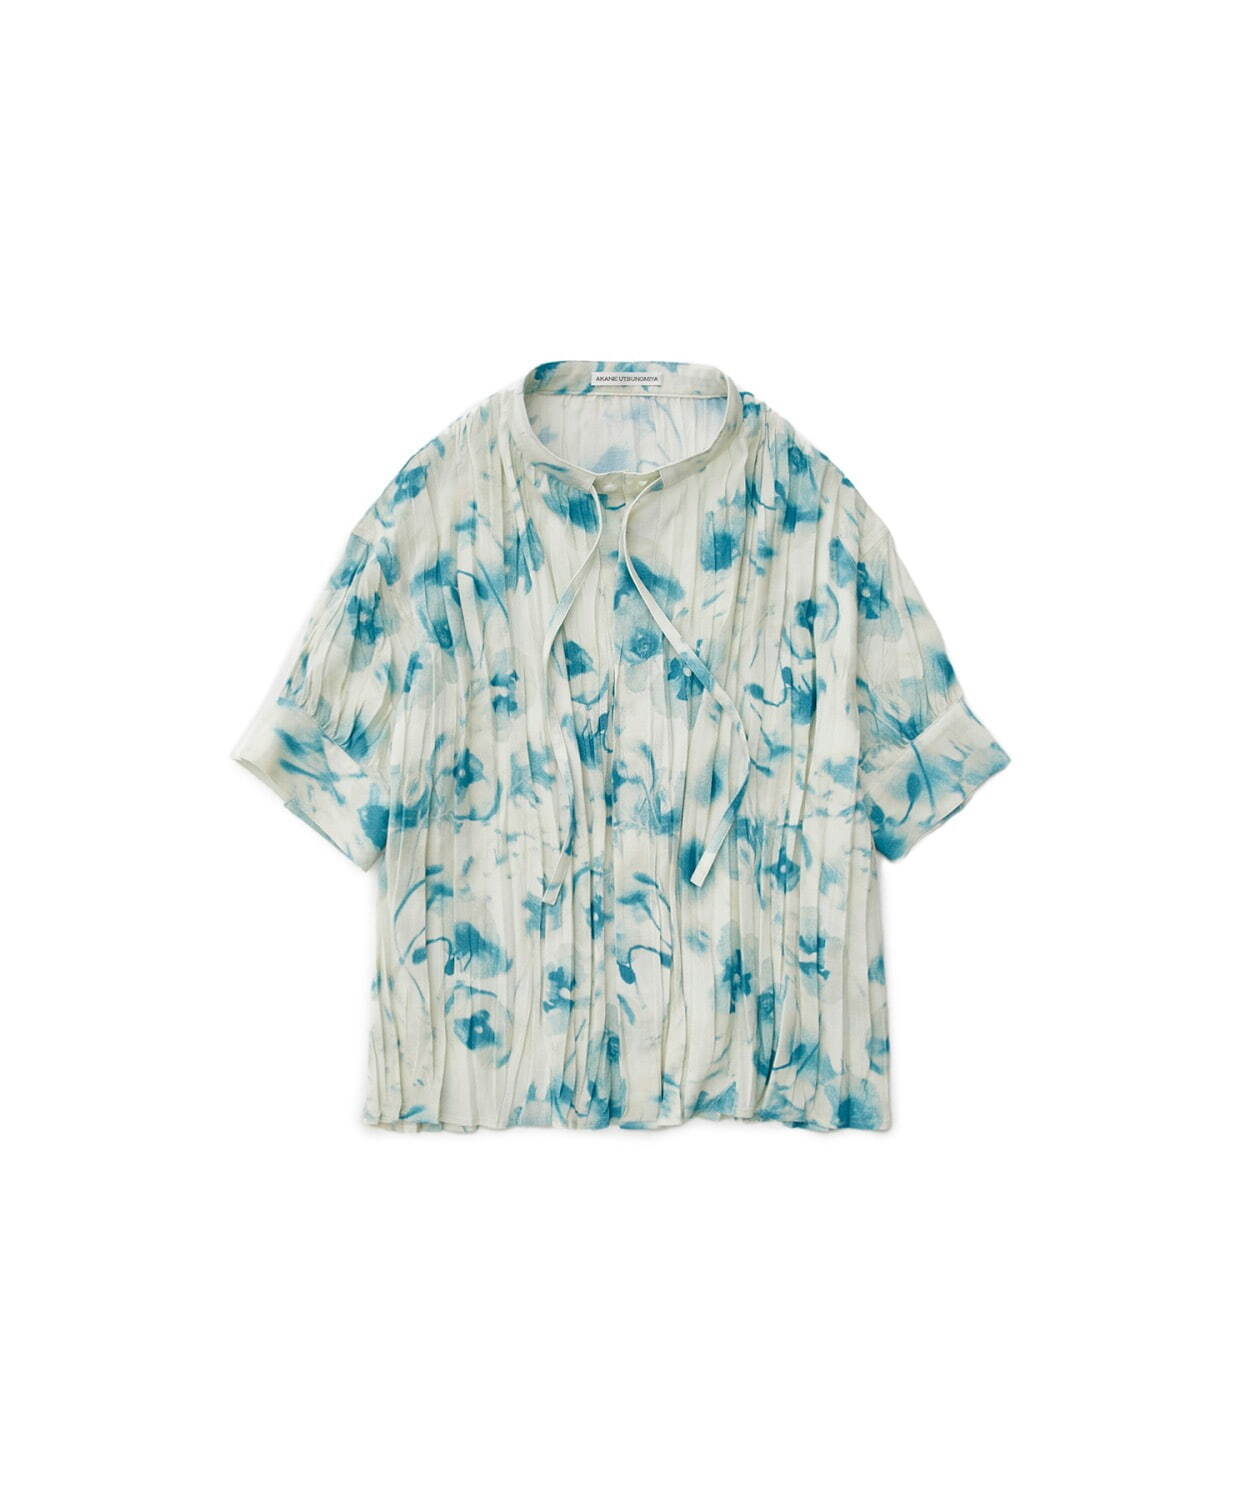 pleated blouse 47,300円